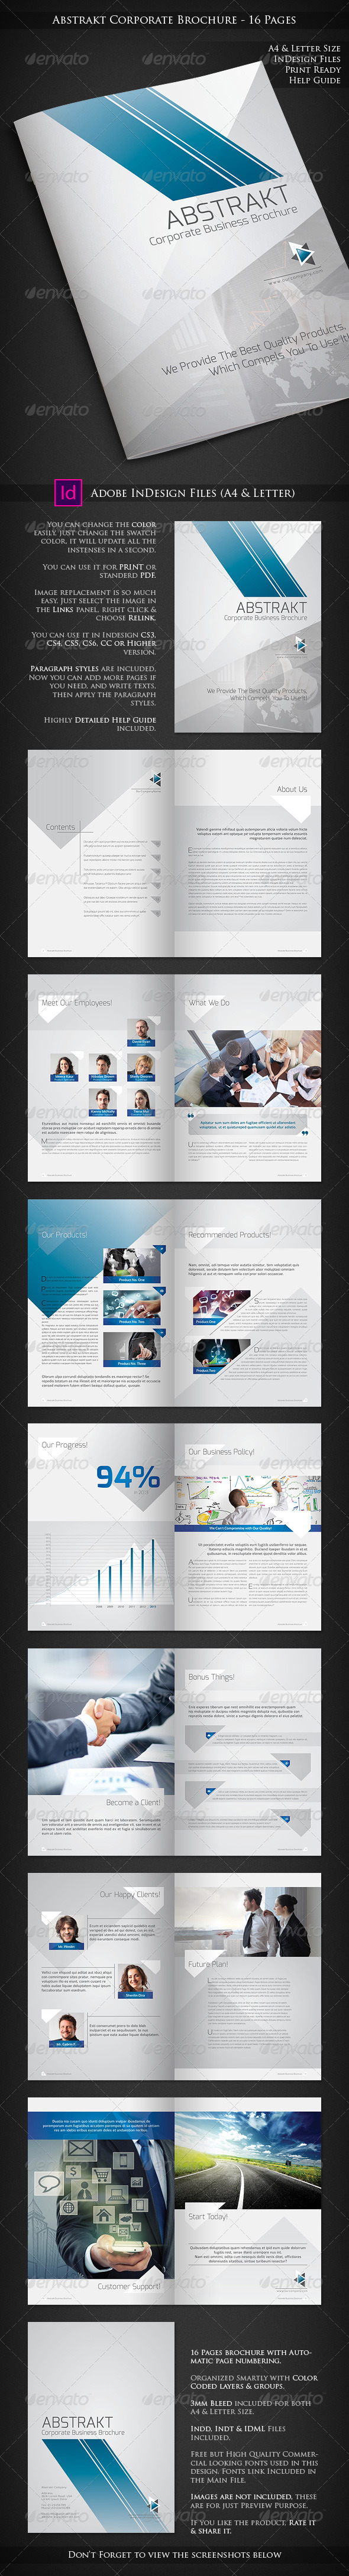 Abstrakt - Corporate Brochure Design - 16 Pages